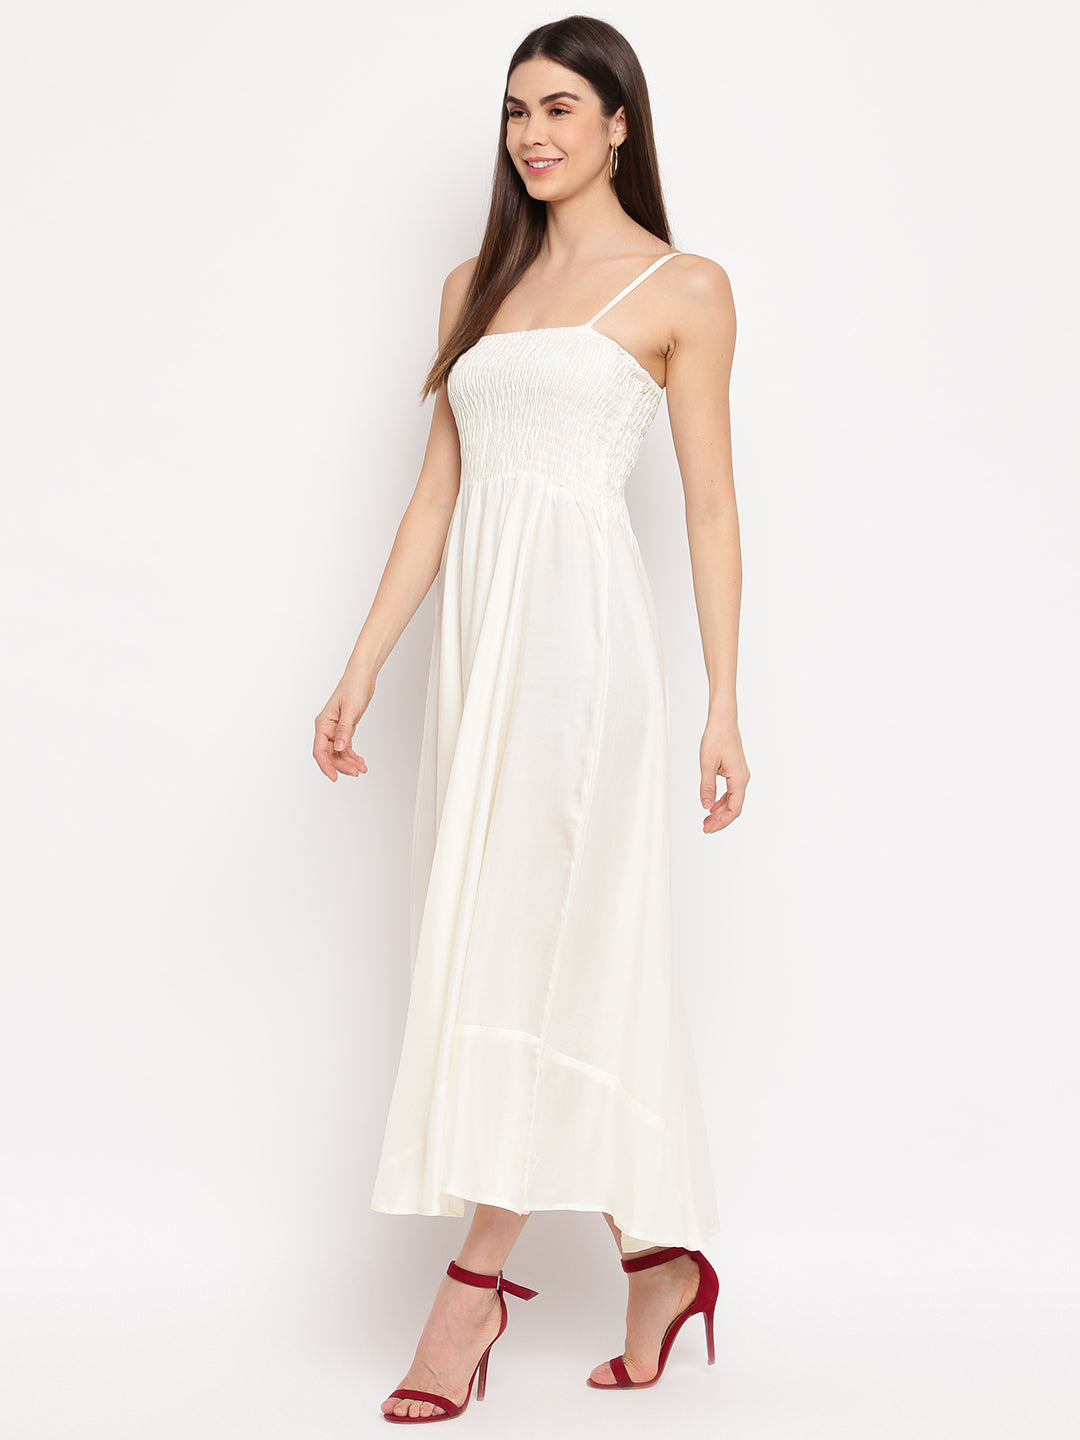 Aawari Fit & Flare Solid Bobbin Dress (OFF WHITE )